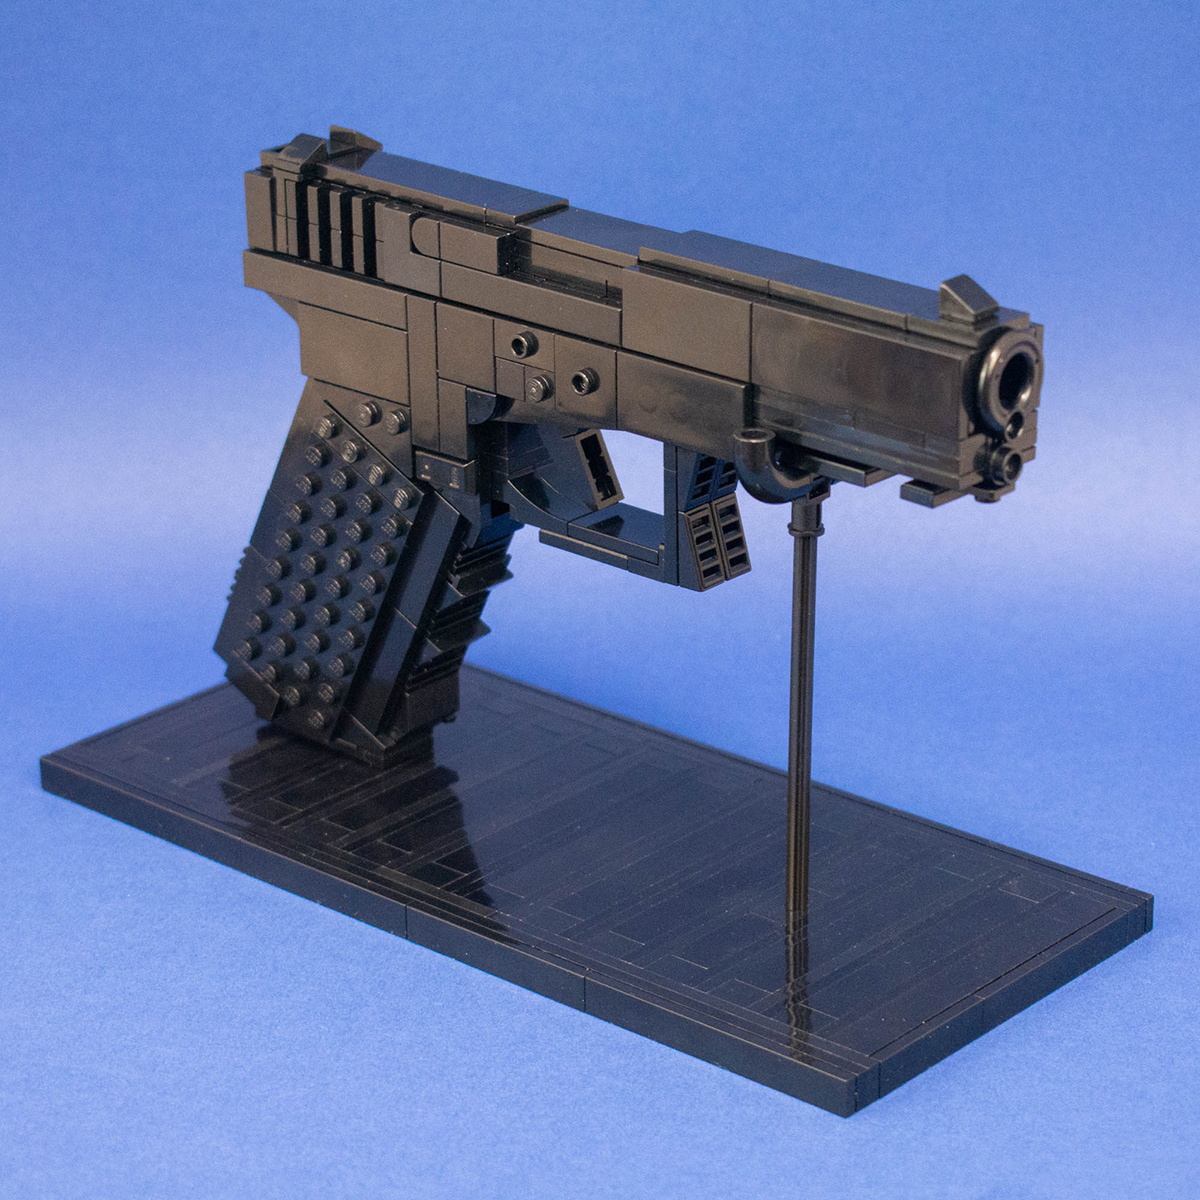 Instructions for Custom LEGO Glock 17 Pistol